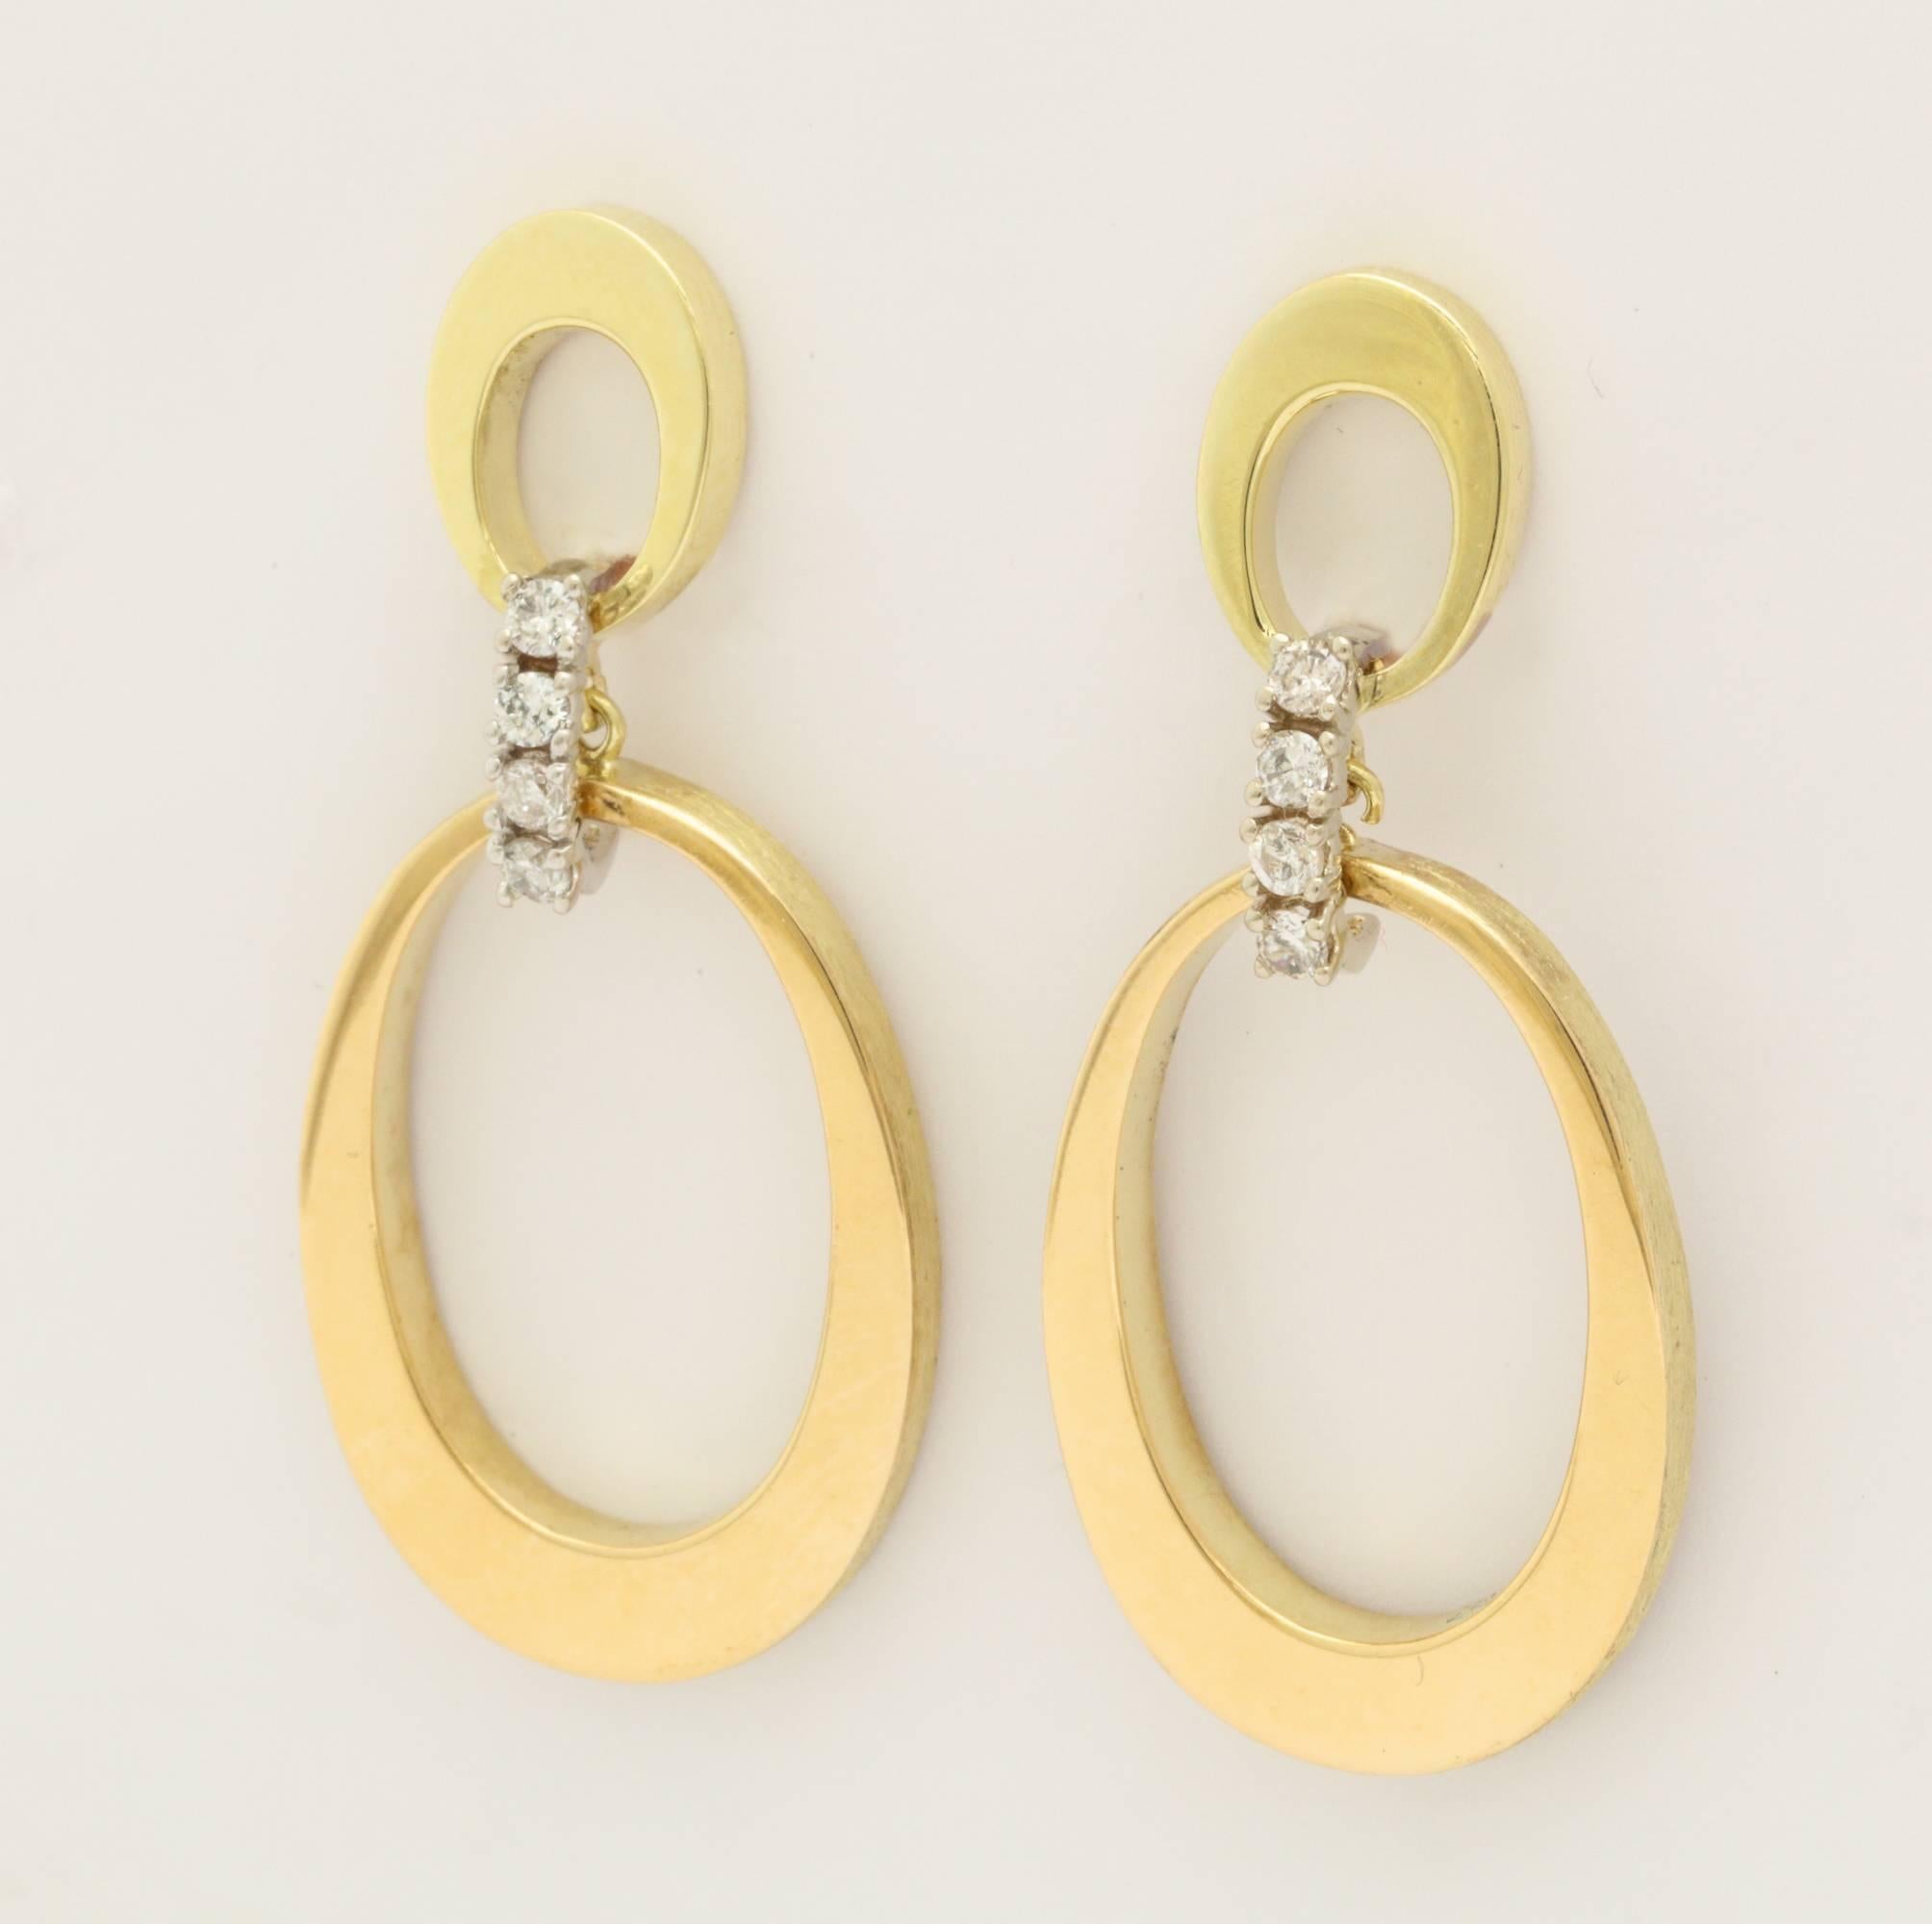 A stylish pair of 1960s modernist 14-karat gold earrings on diamond hinges.